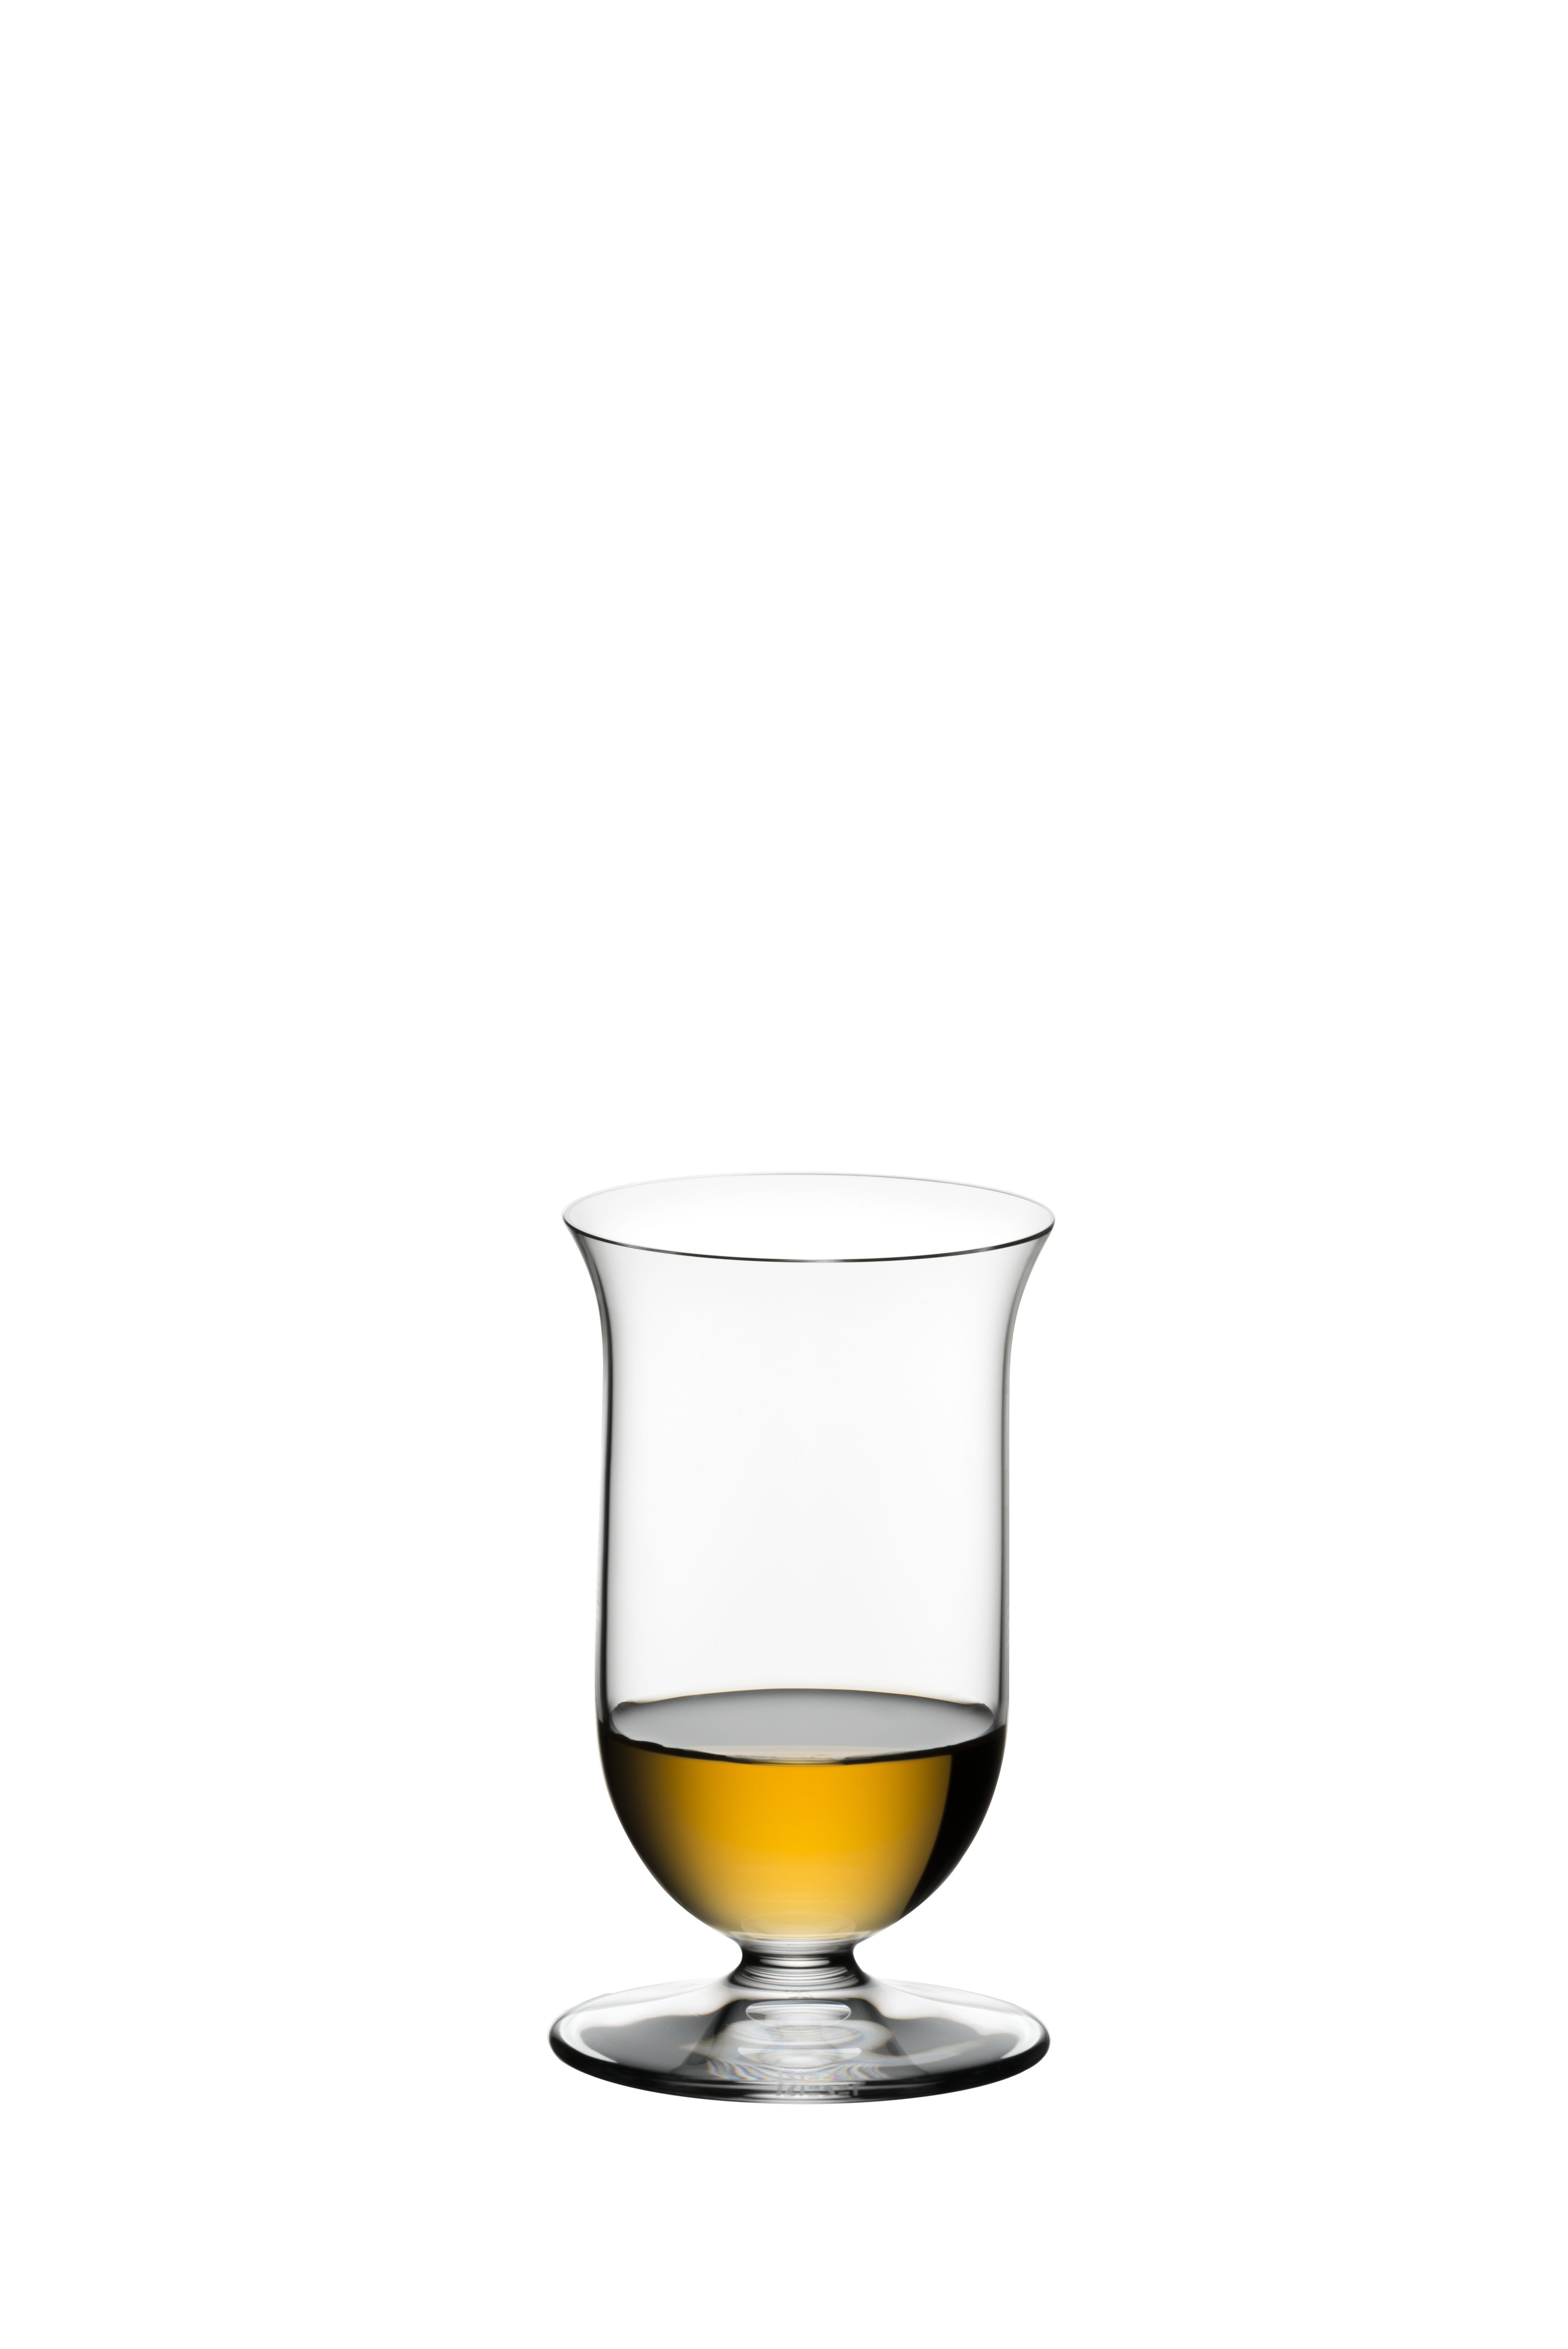 RIEDEL THE WINE GLASS COMPANY Glas Riedel Vinum 6416/80 Single Malt Whiskey 2er Set, Glas